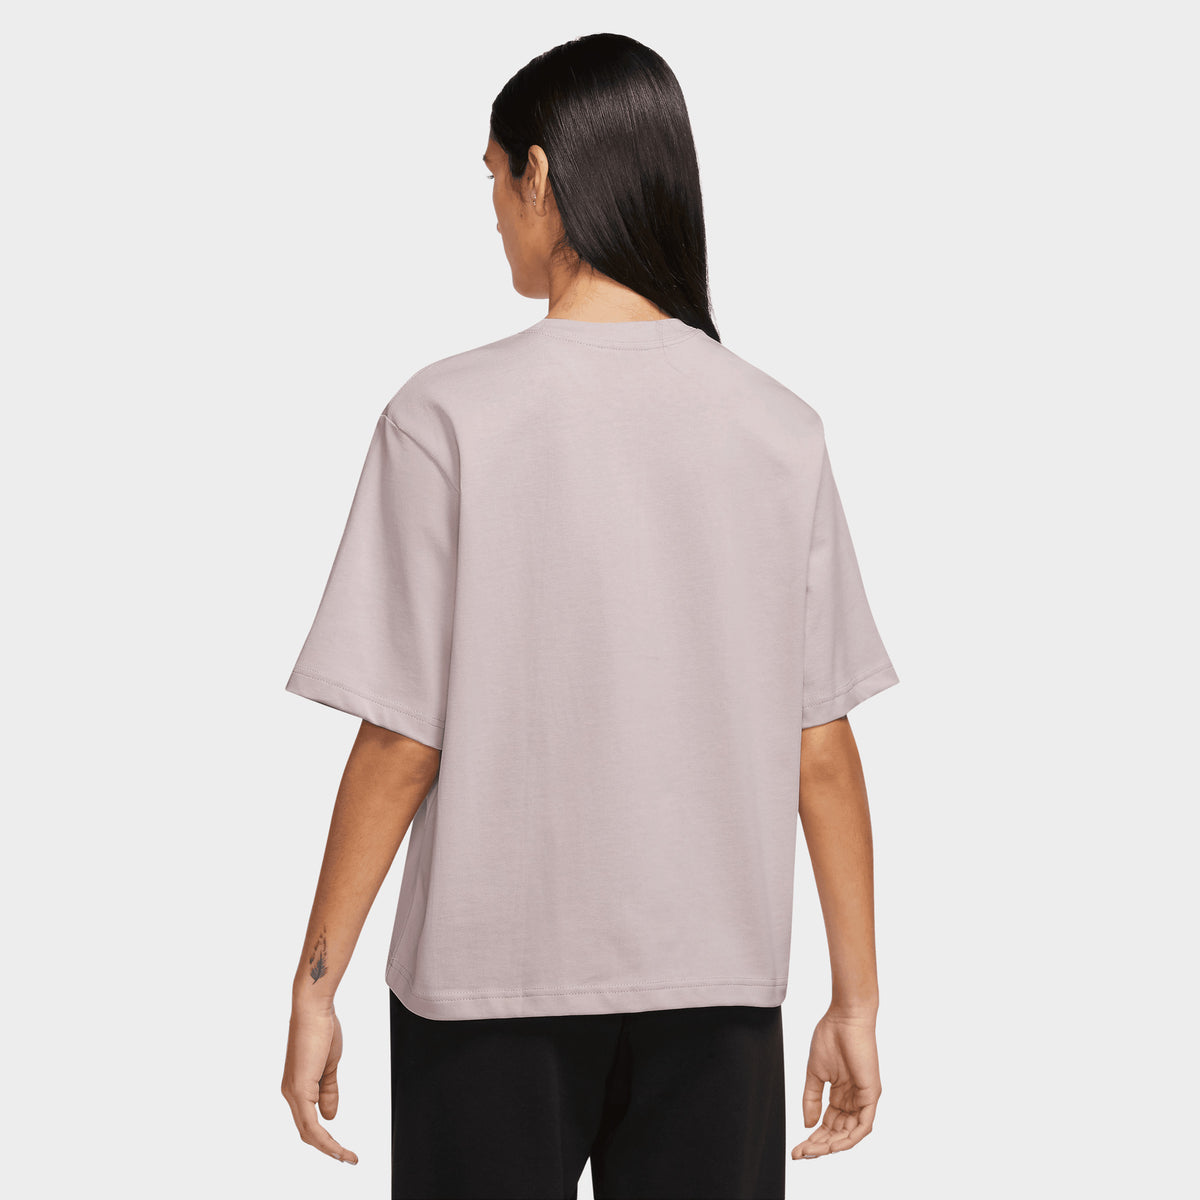 Nike Women's Sportswear Essential Logo T-Shirt, Plus Size 1X, Olive/White